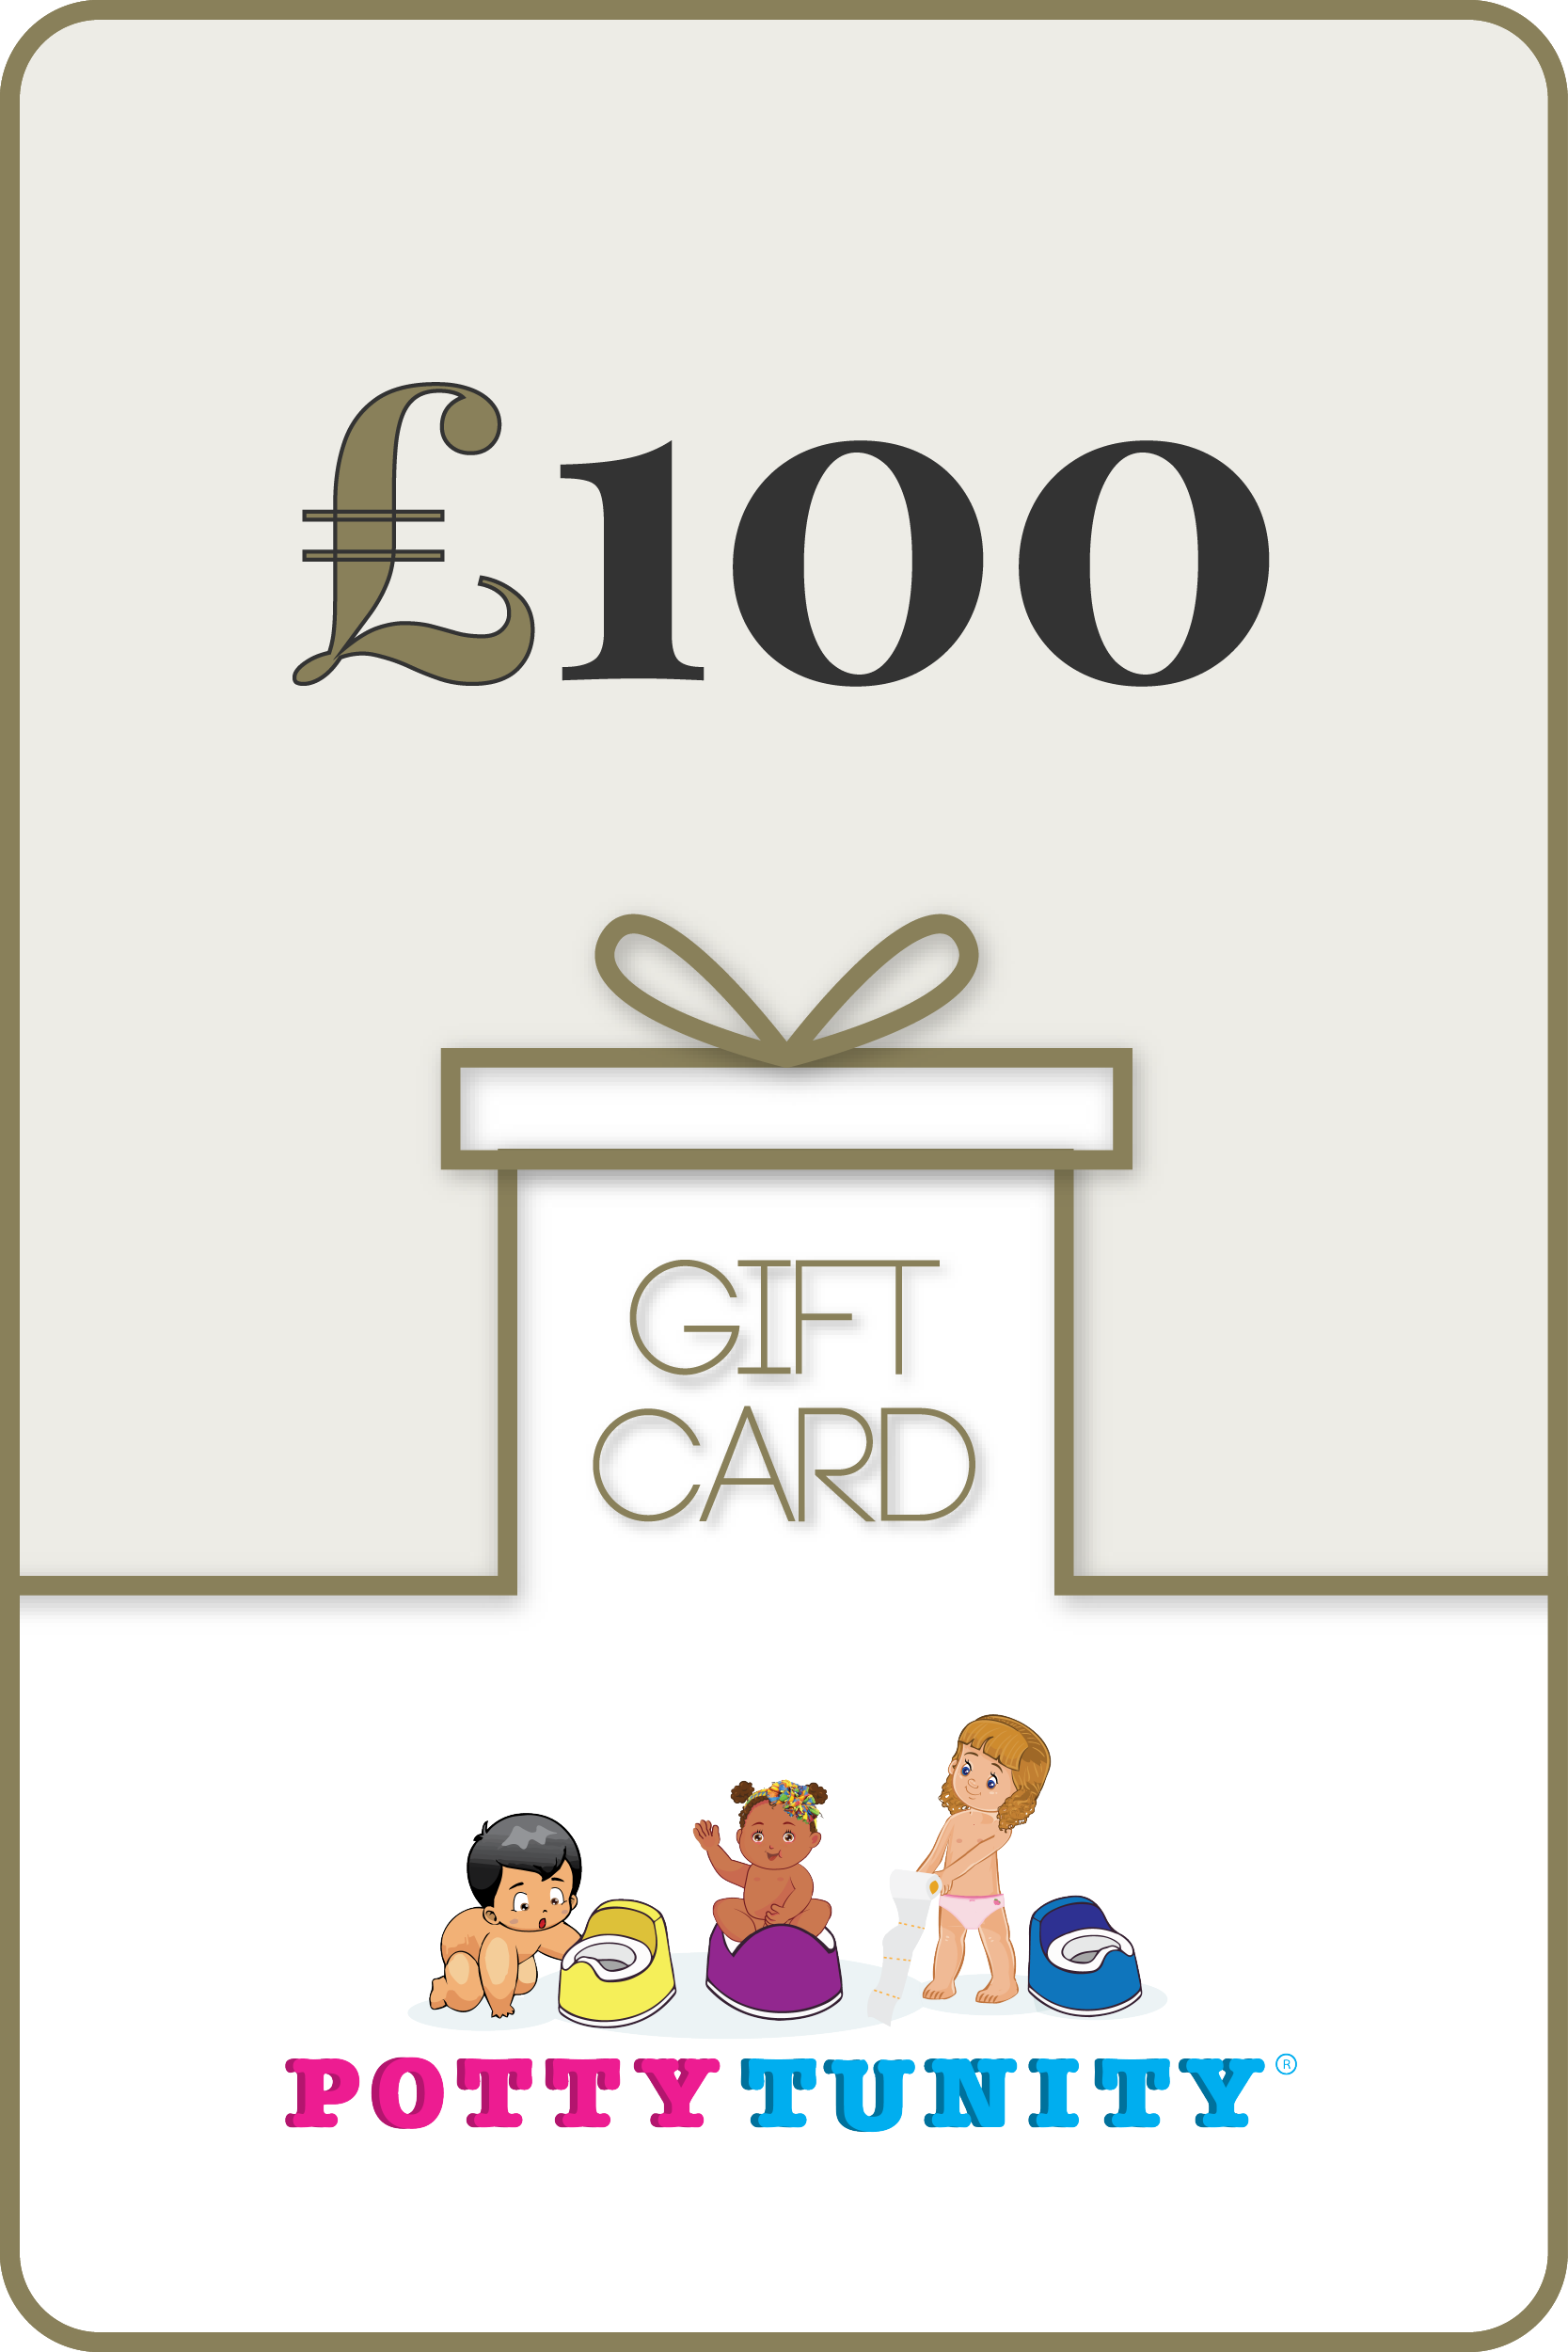 £100 GIFT CARD